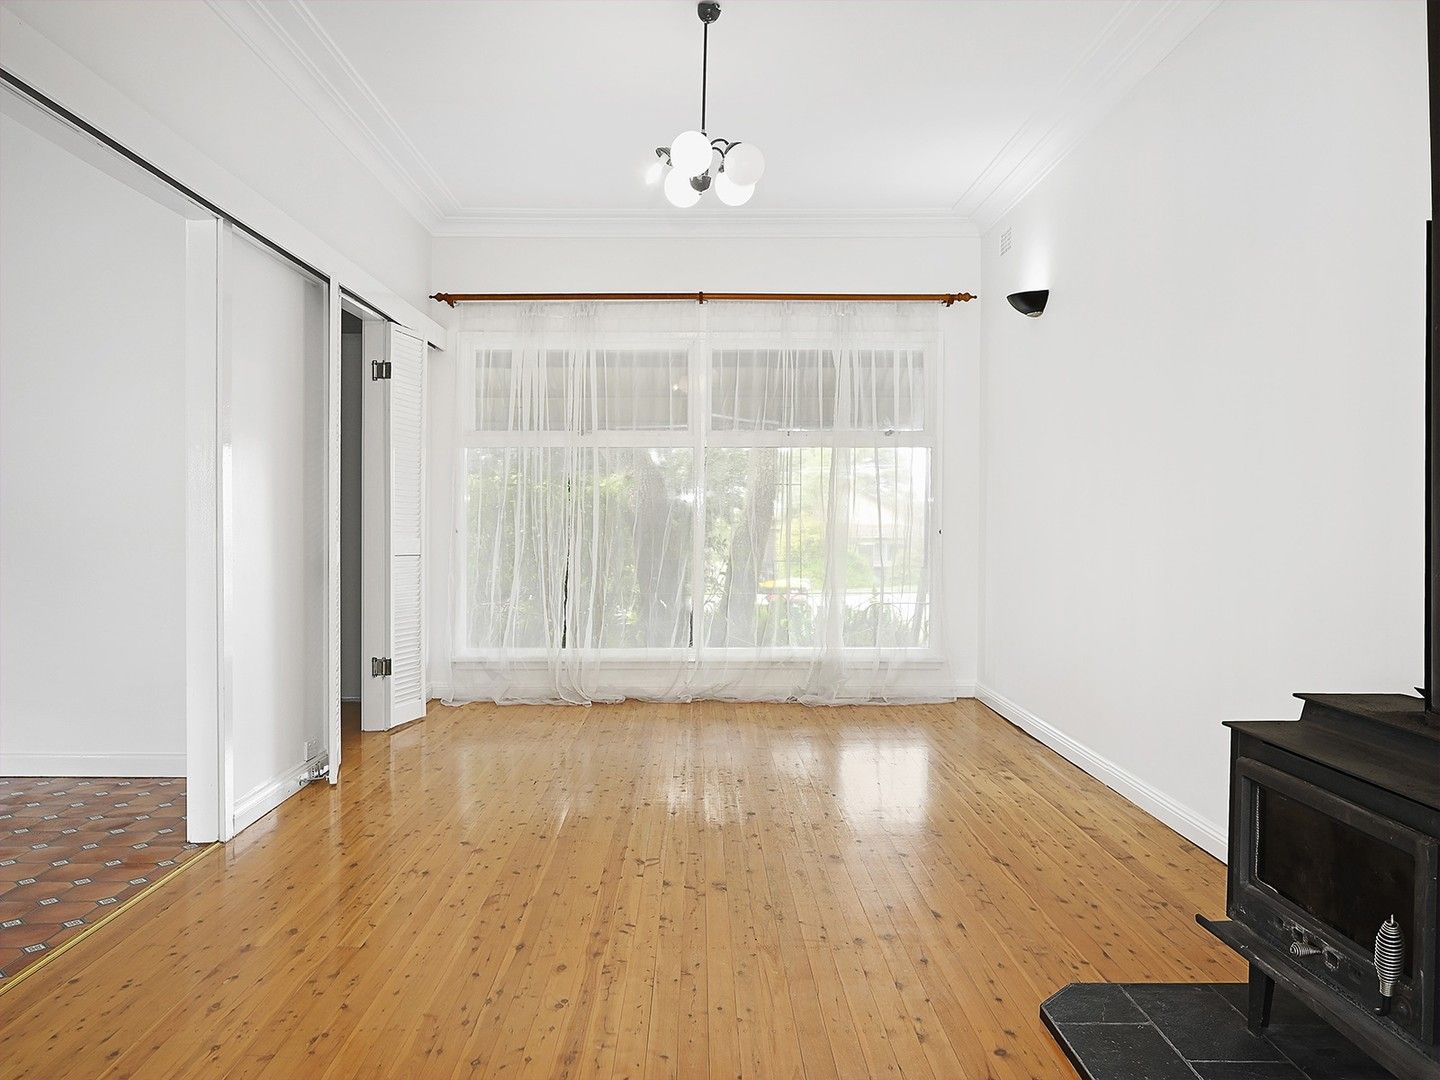 3 bedrooms House in 26 Goulding Street RYDE NSW, 2112